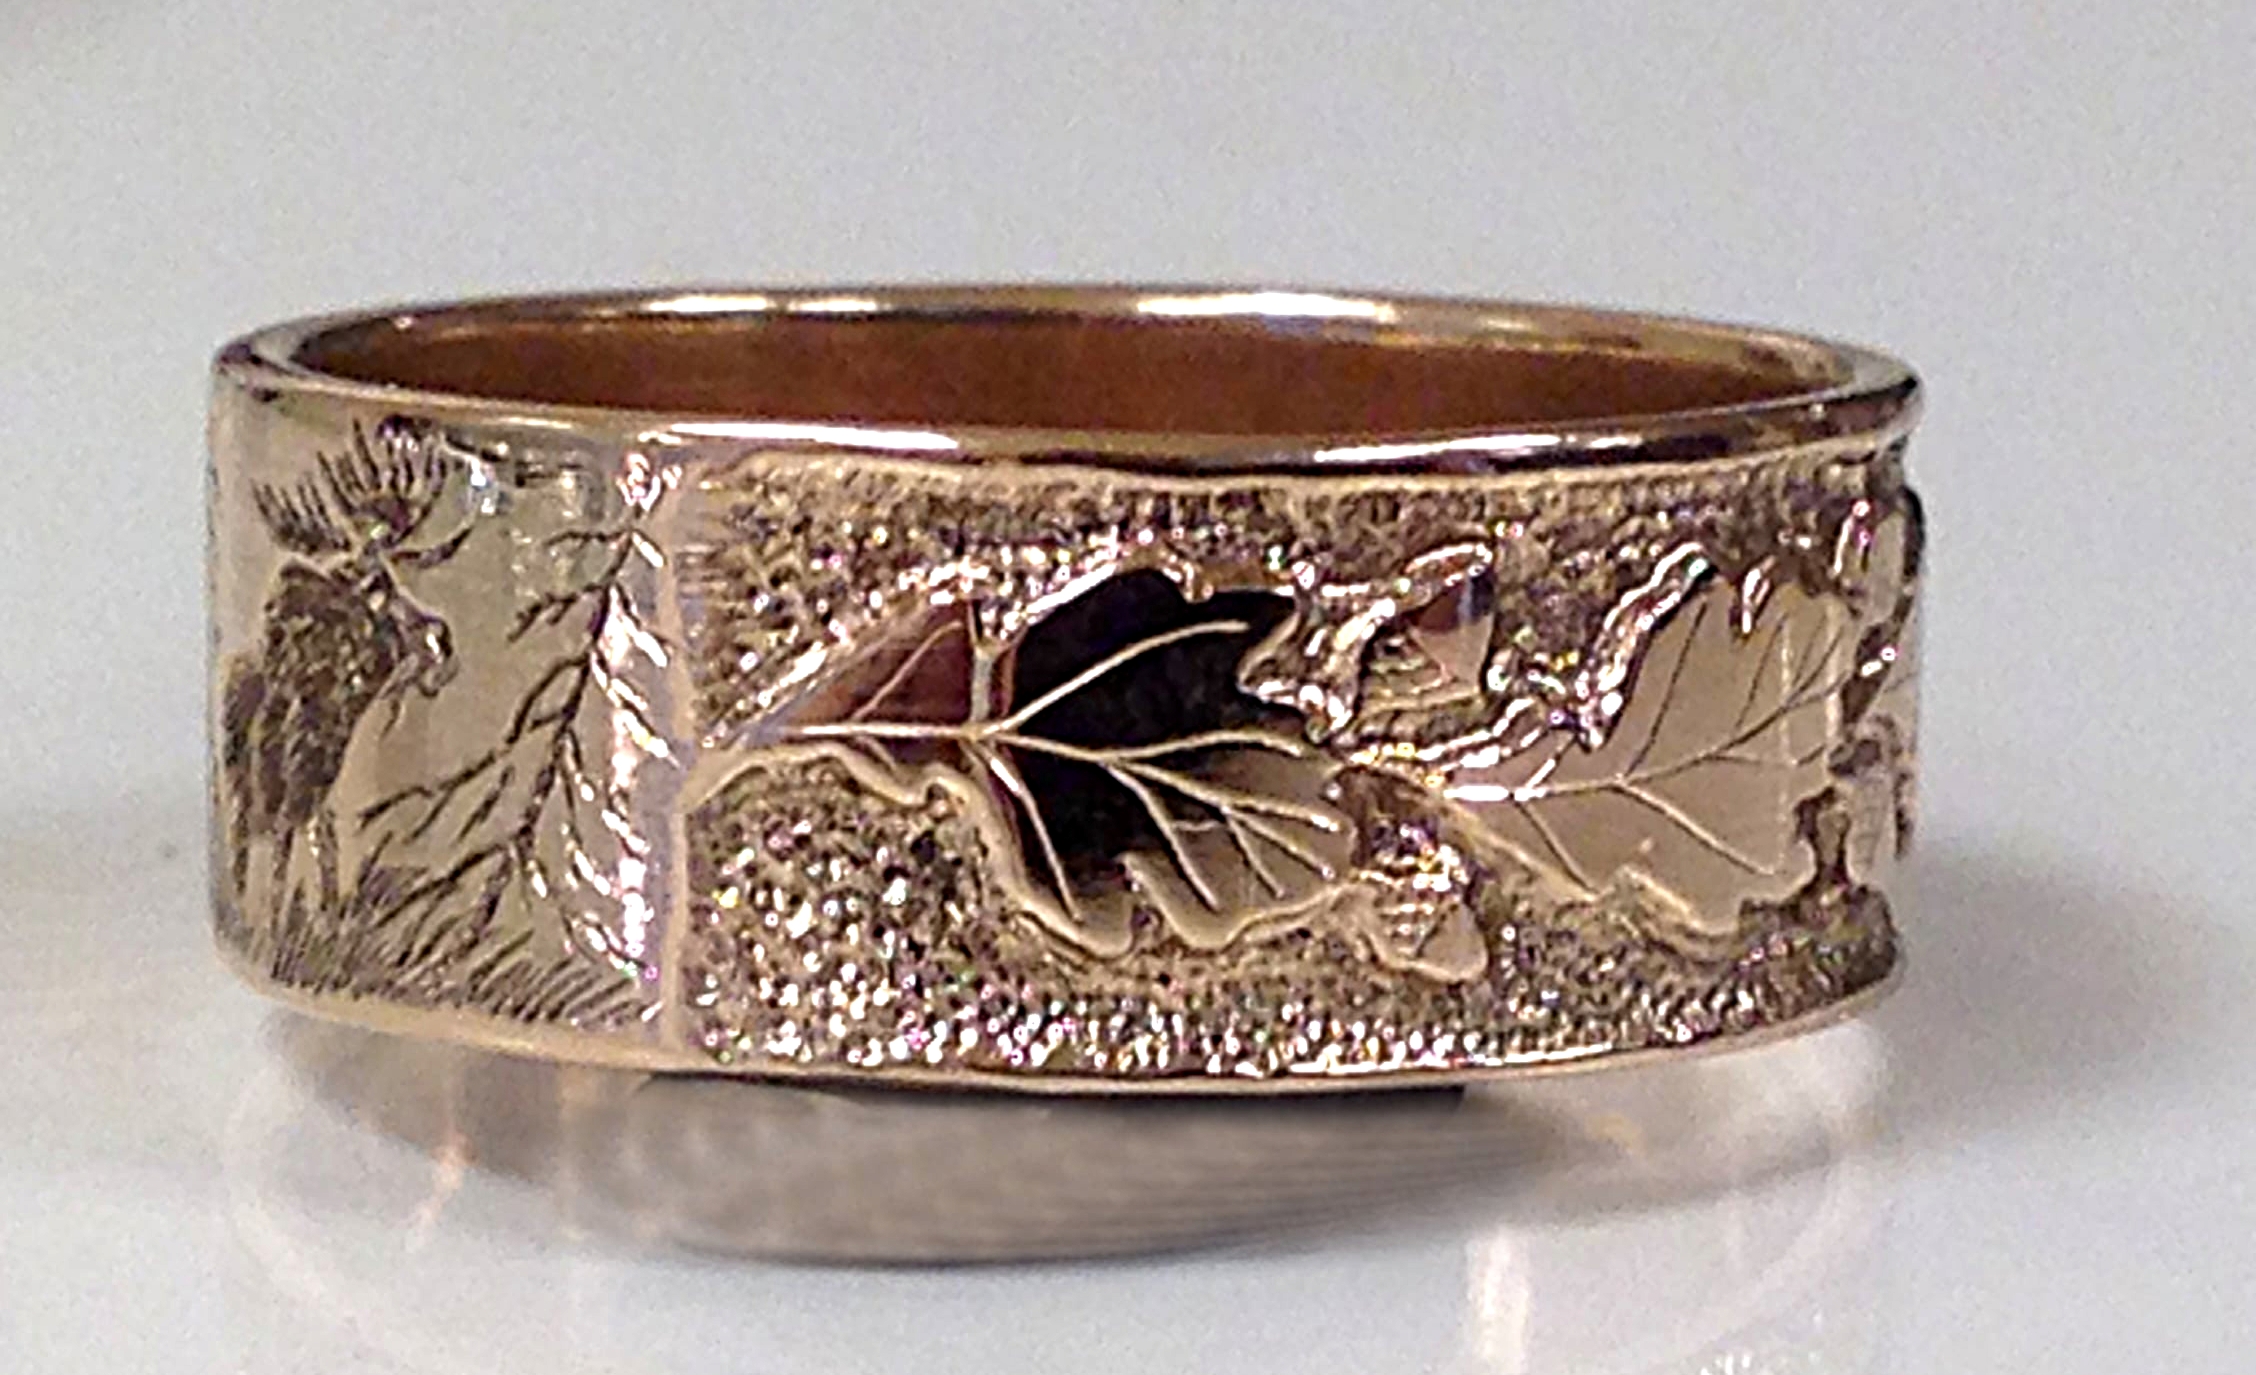 unique custom engraved gold ring with acorn design 